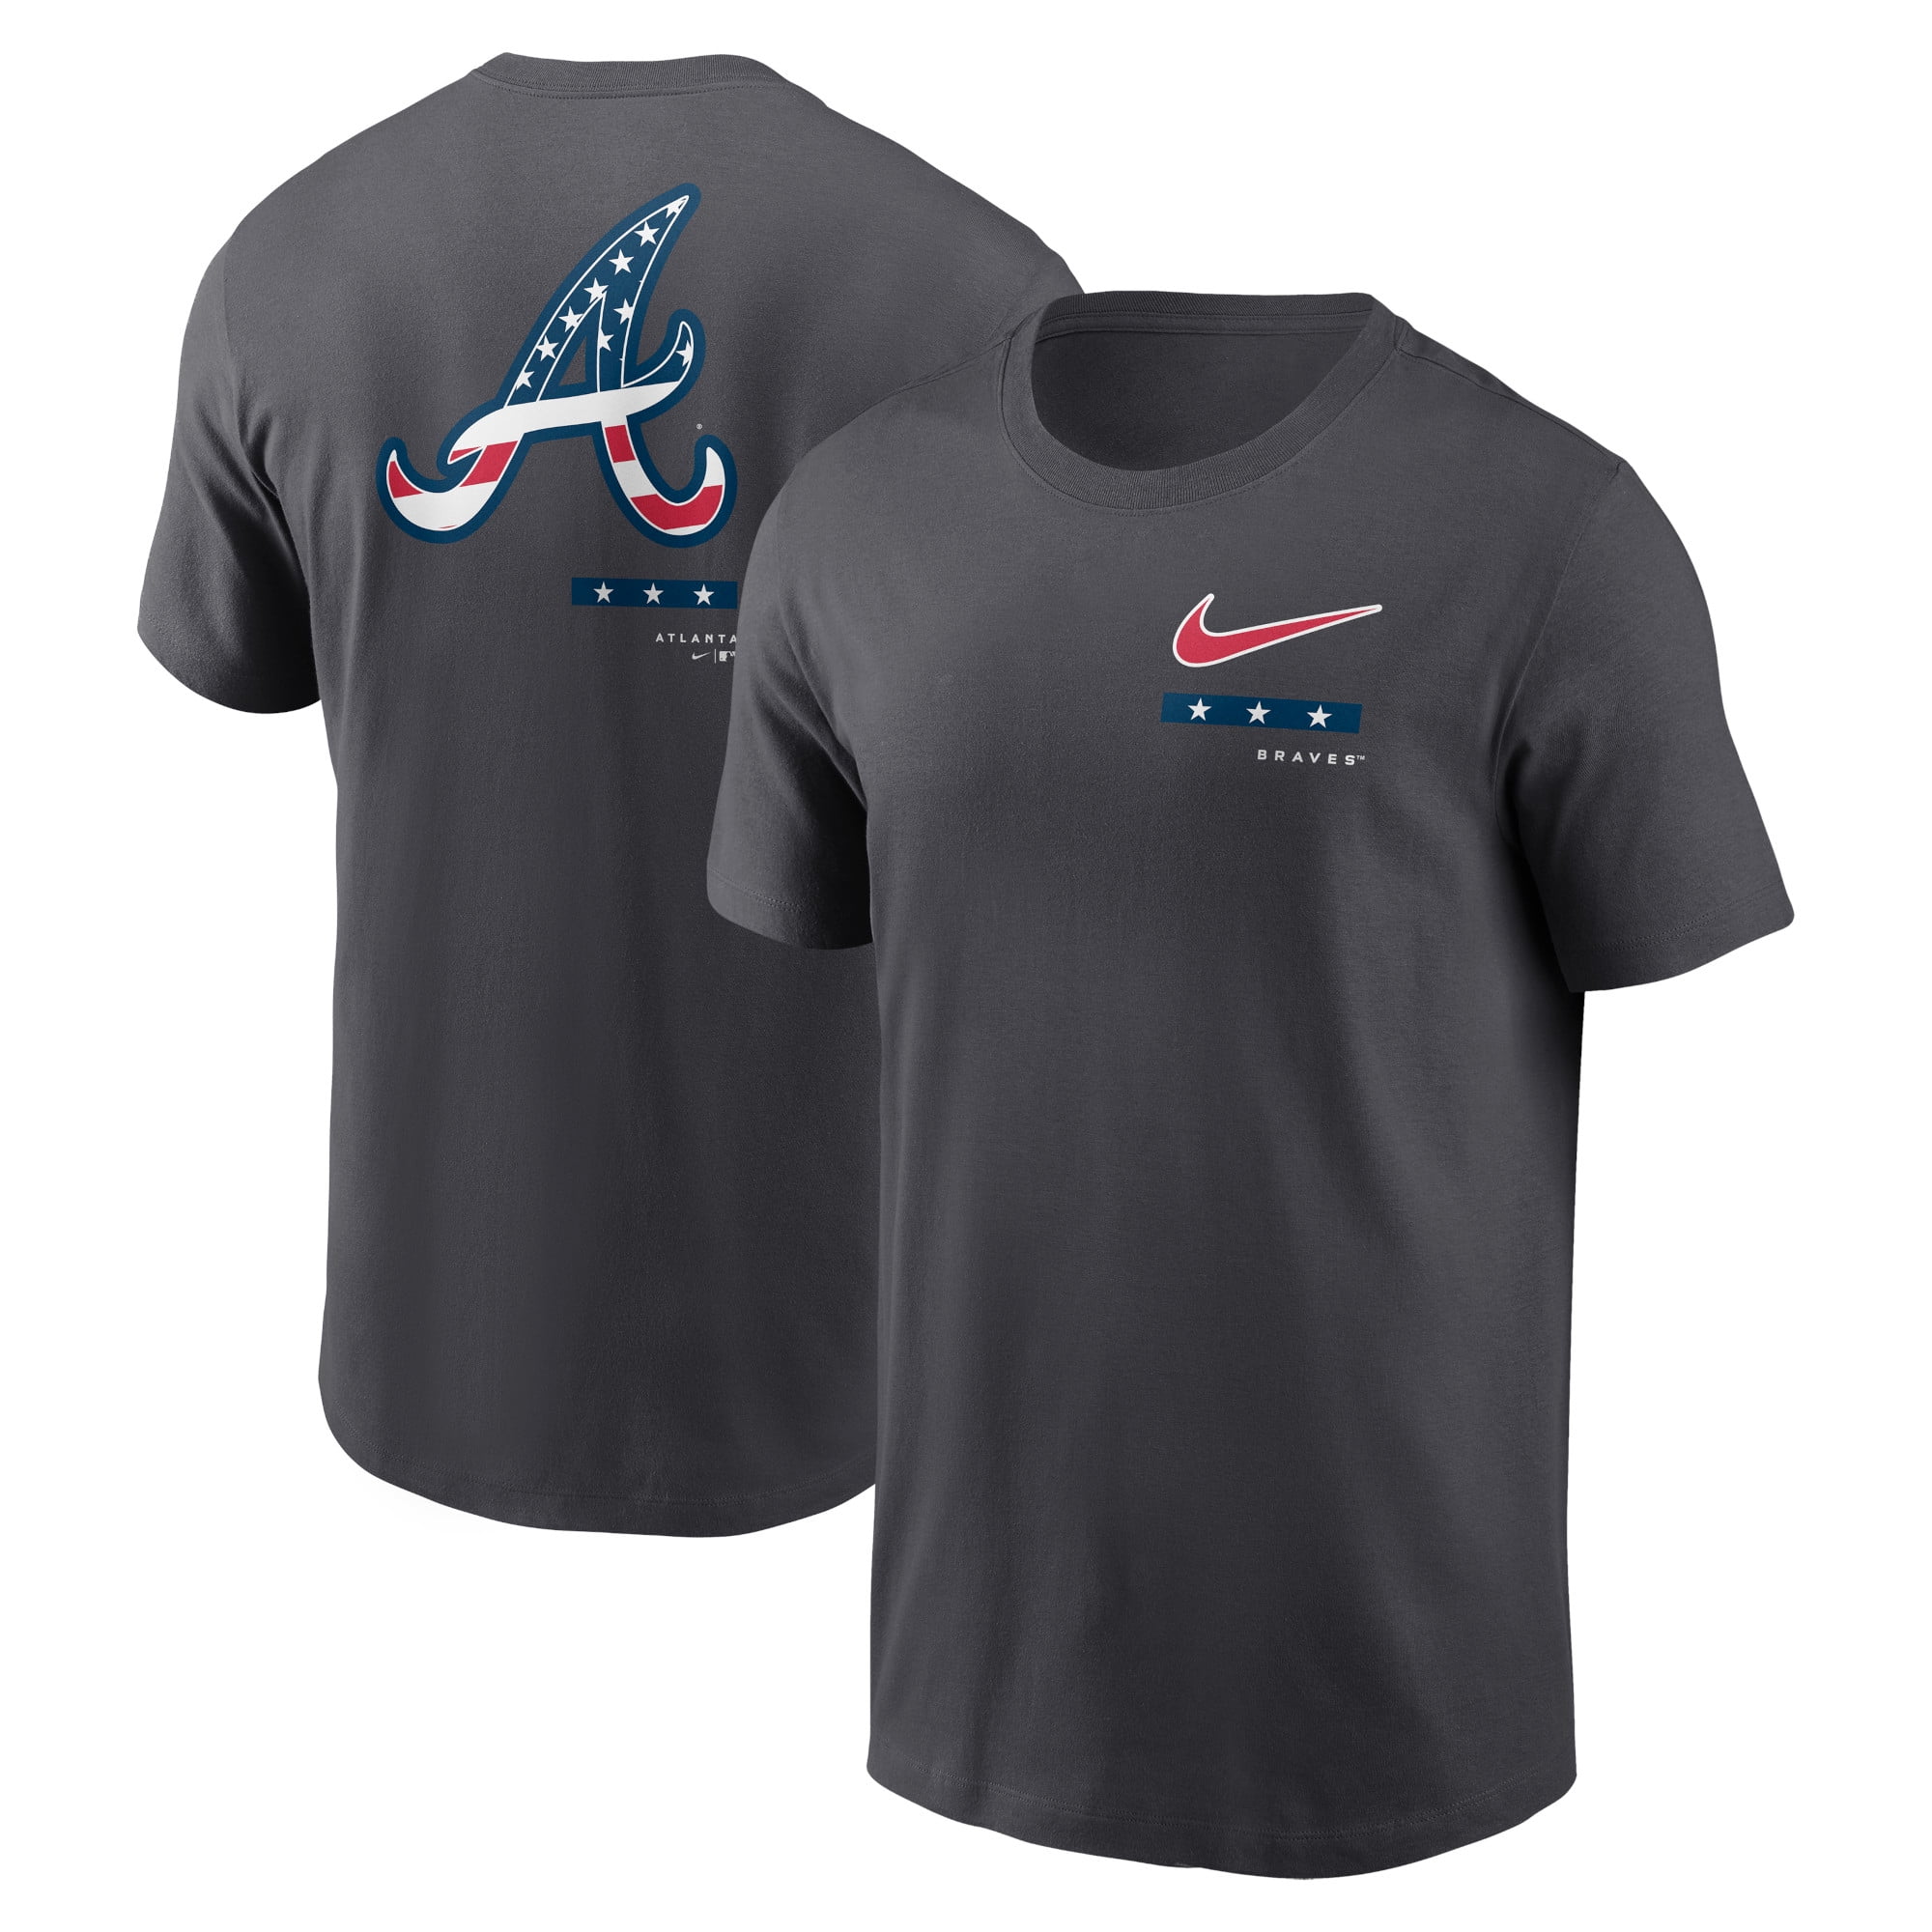 Men's Nike Anthracite Atlanta Braves Americana T-Shirt - Walmart.com